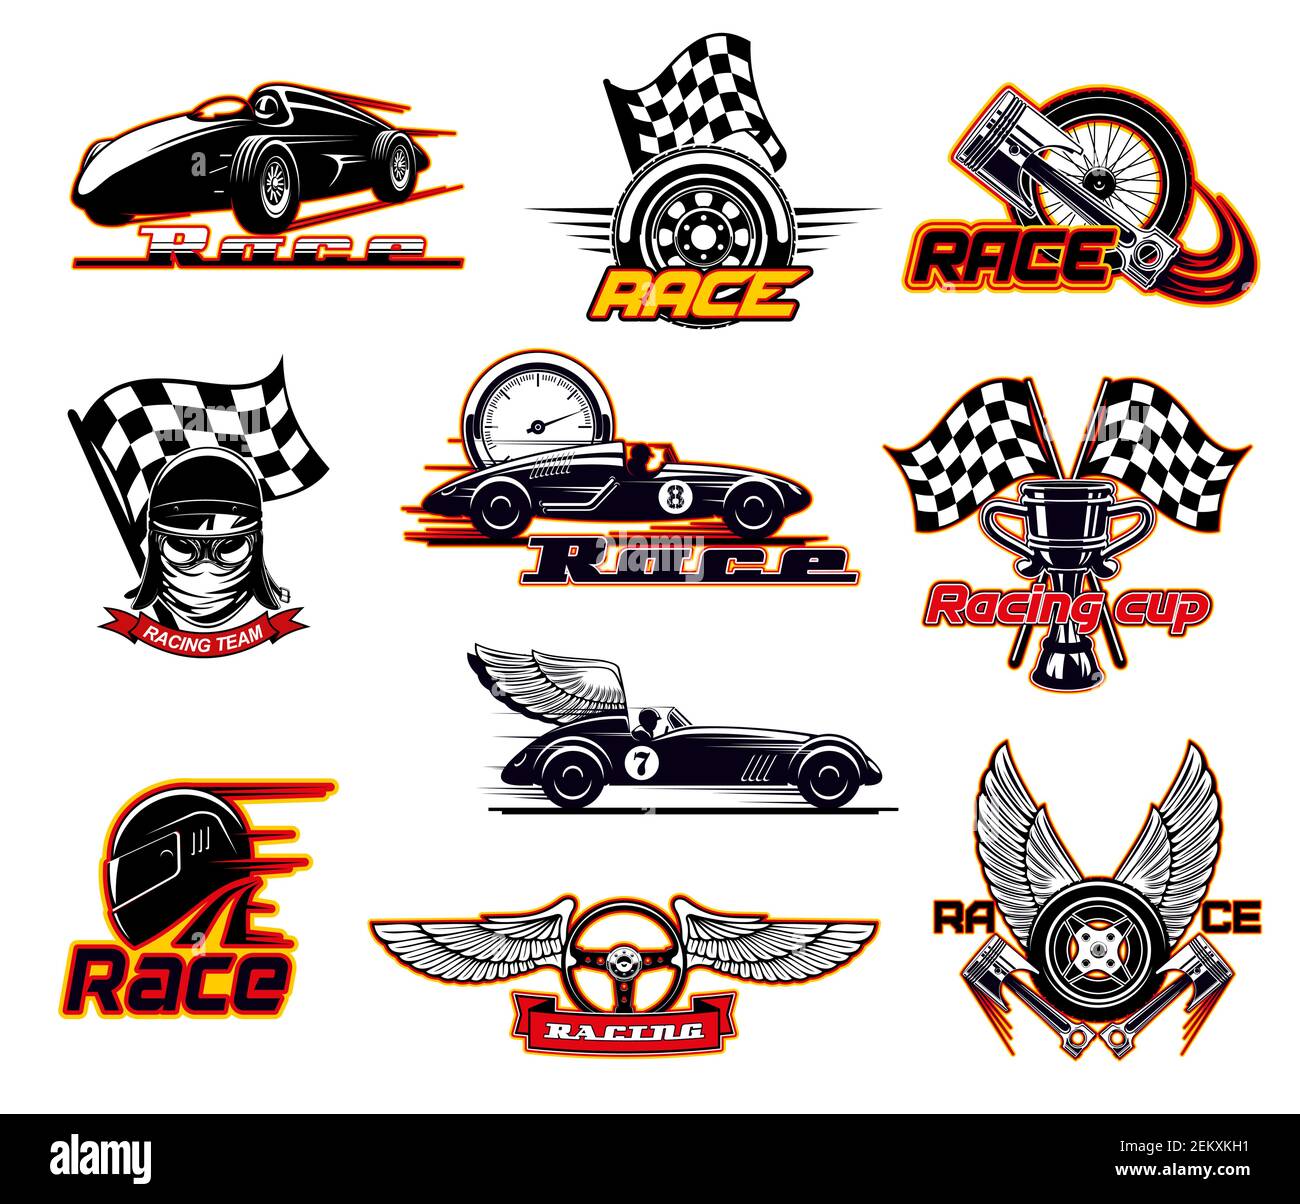 USA Seller Fast n Furious Drag Street Race Decal Sticker 